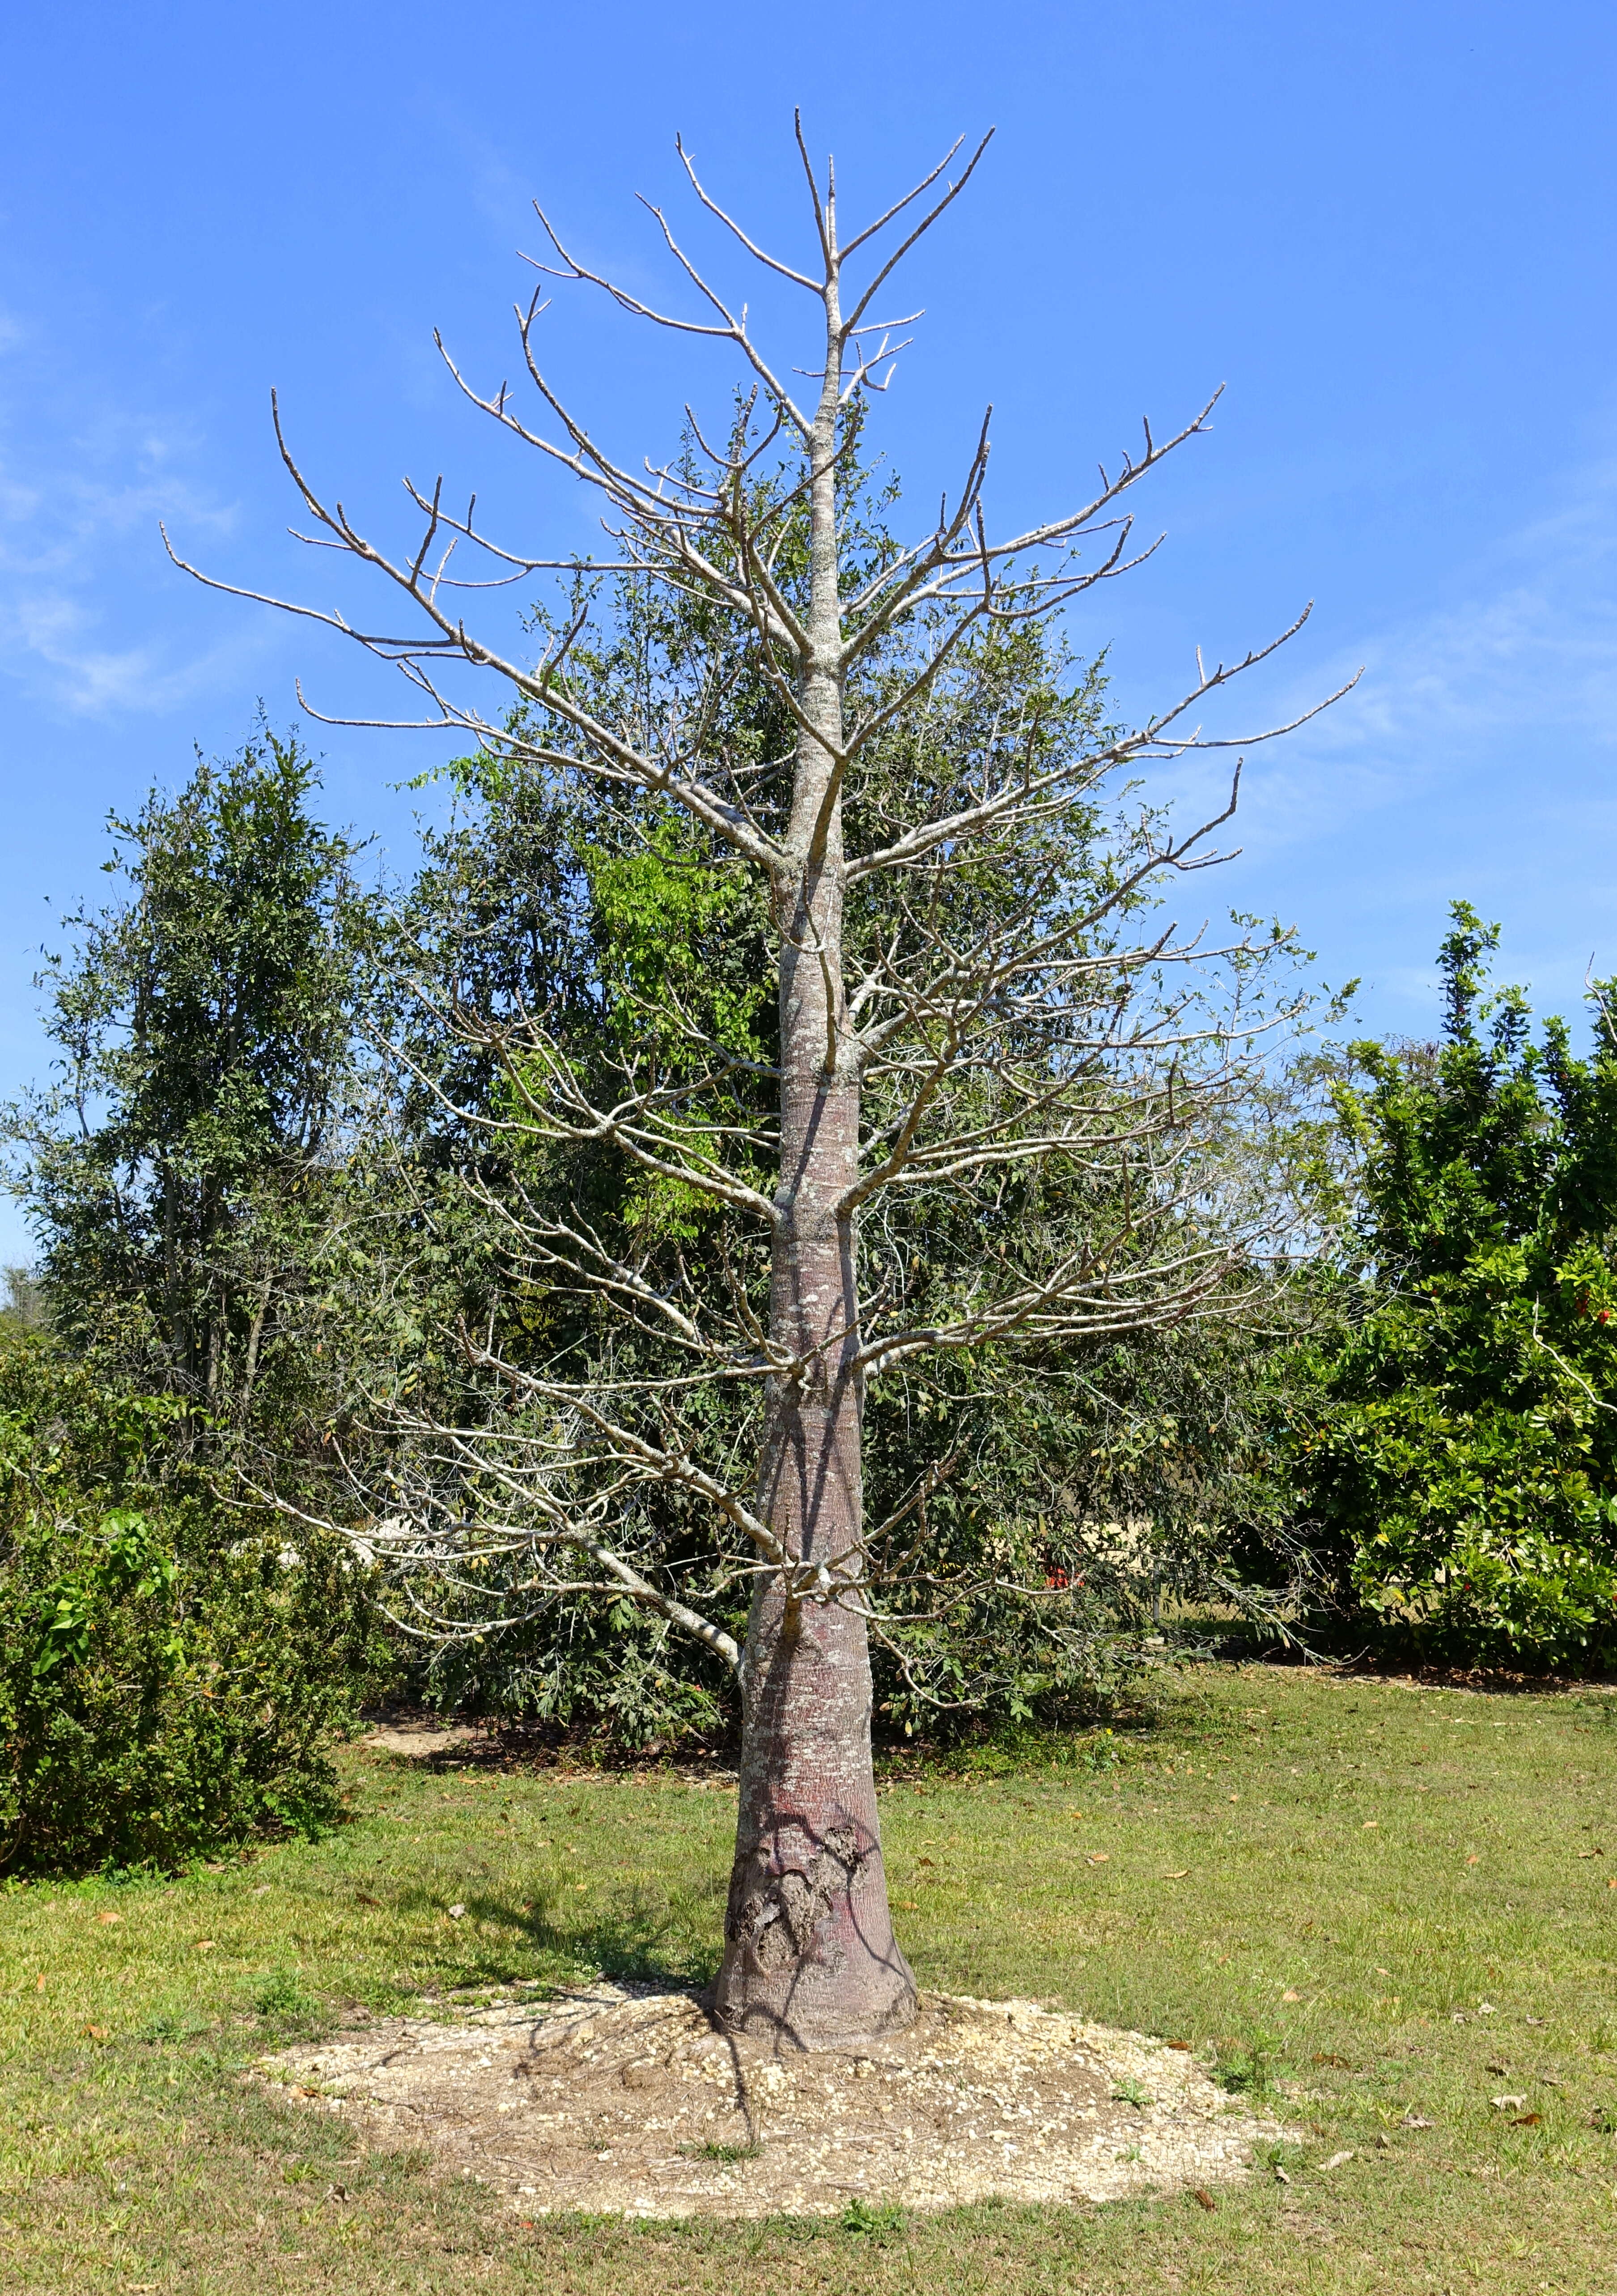 Image of Suarez baobab